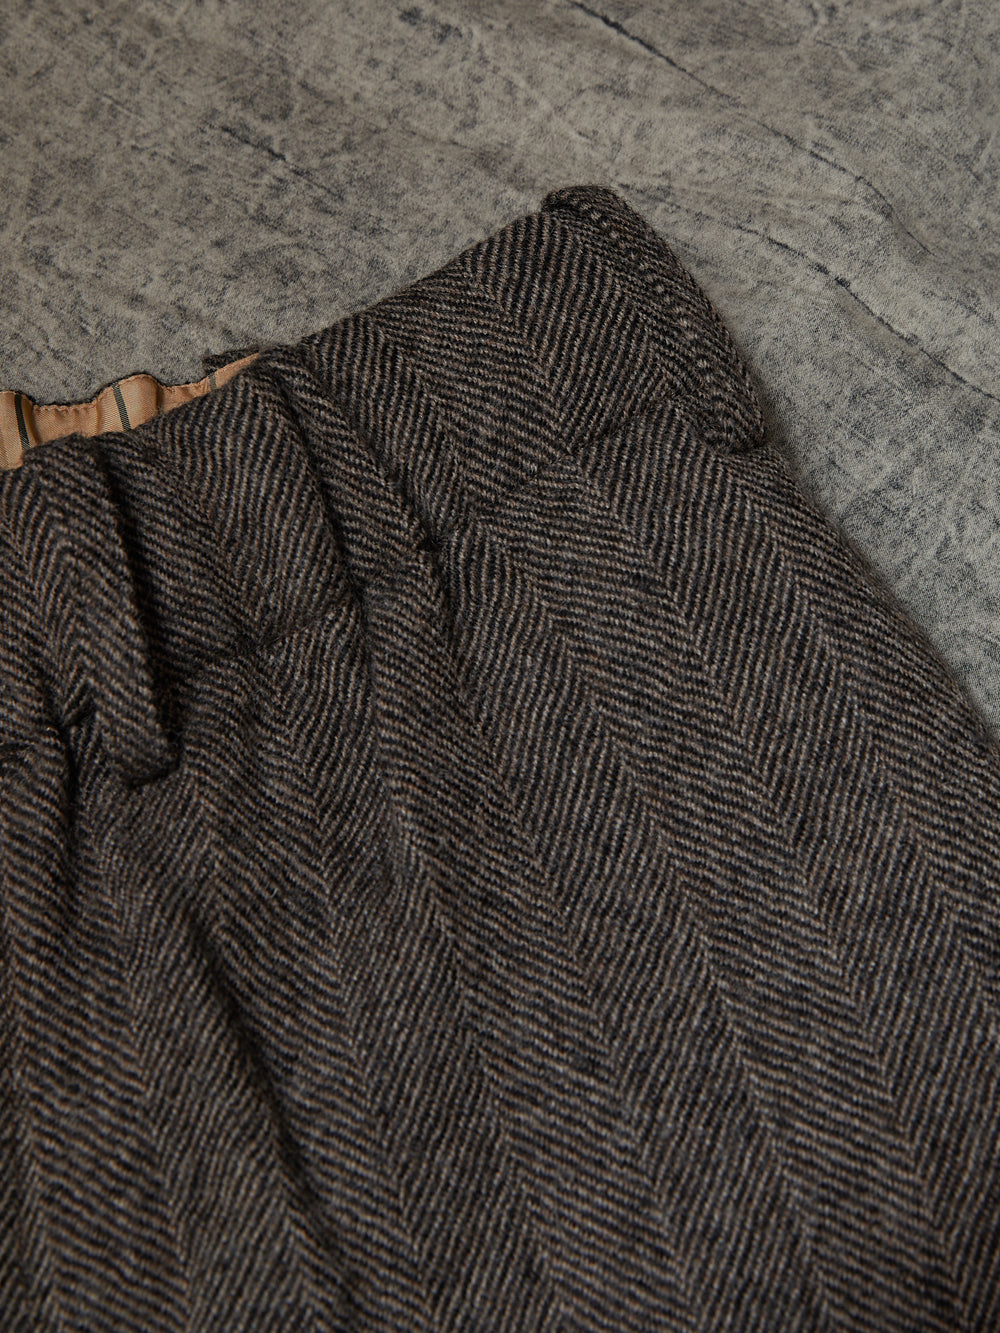 Pigiama Pants Wool Tan / Black